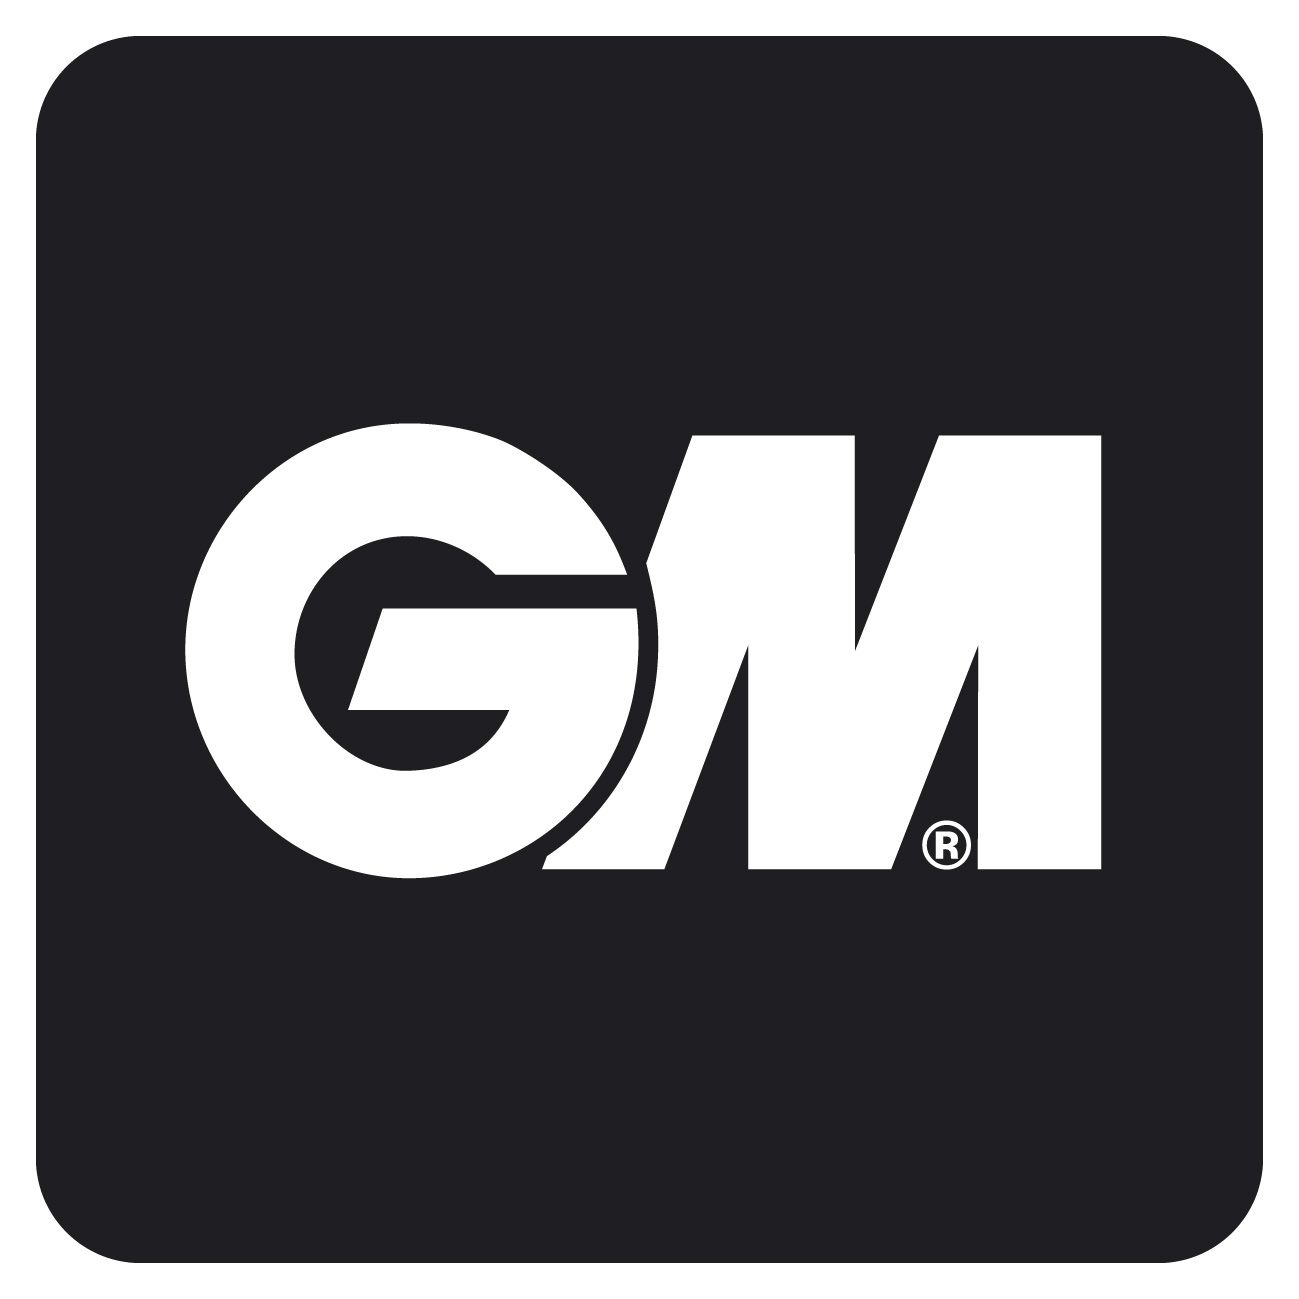 Brand: Gunn & Moore